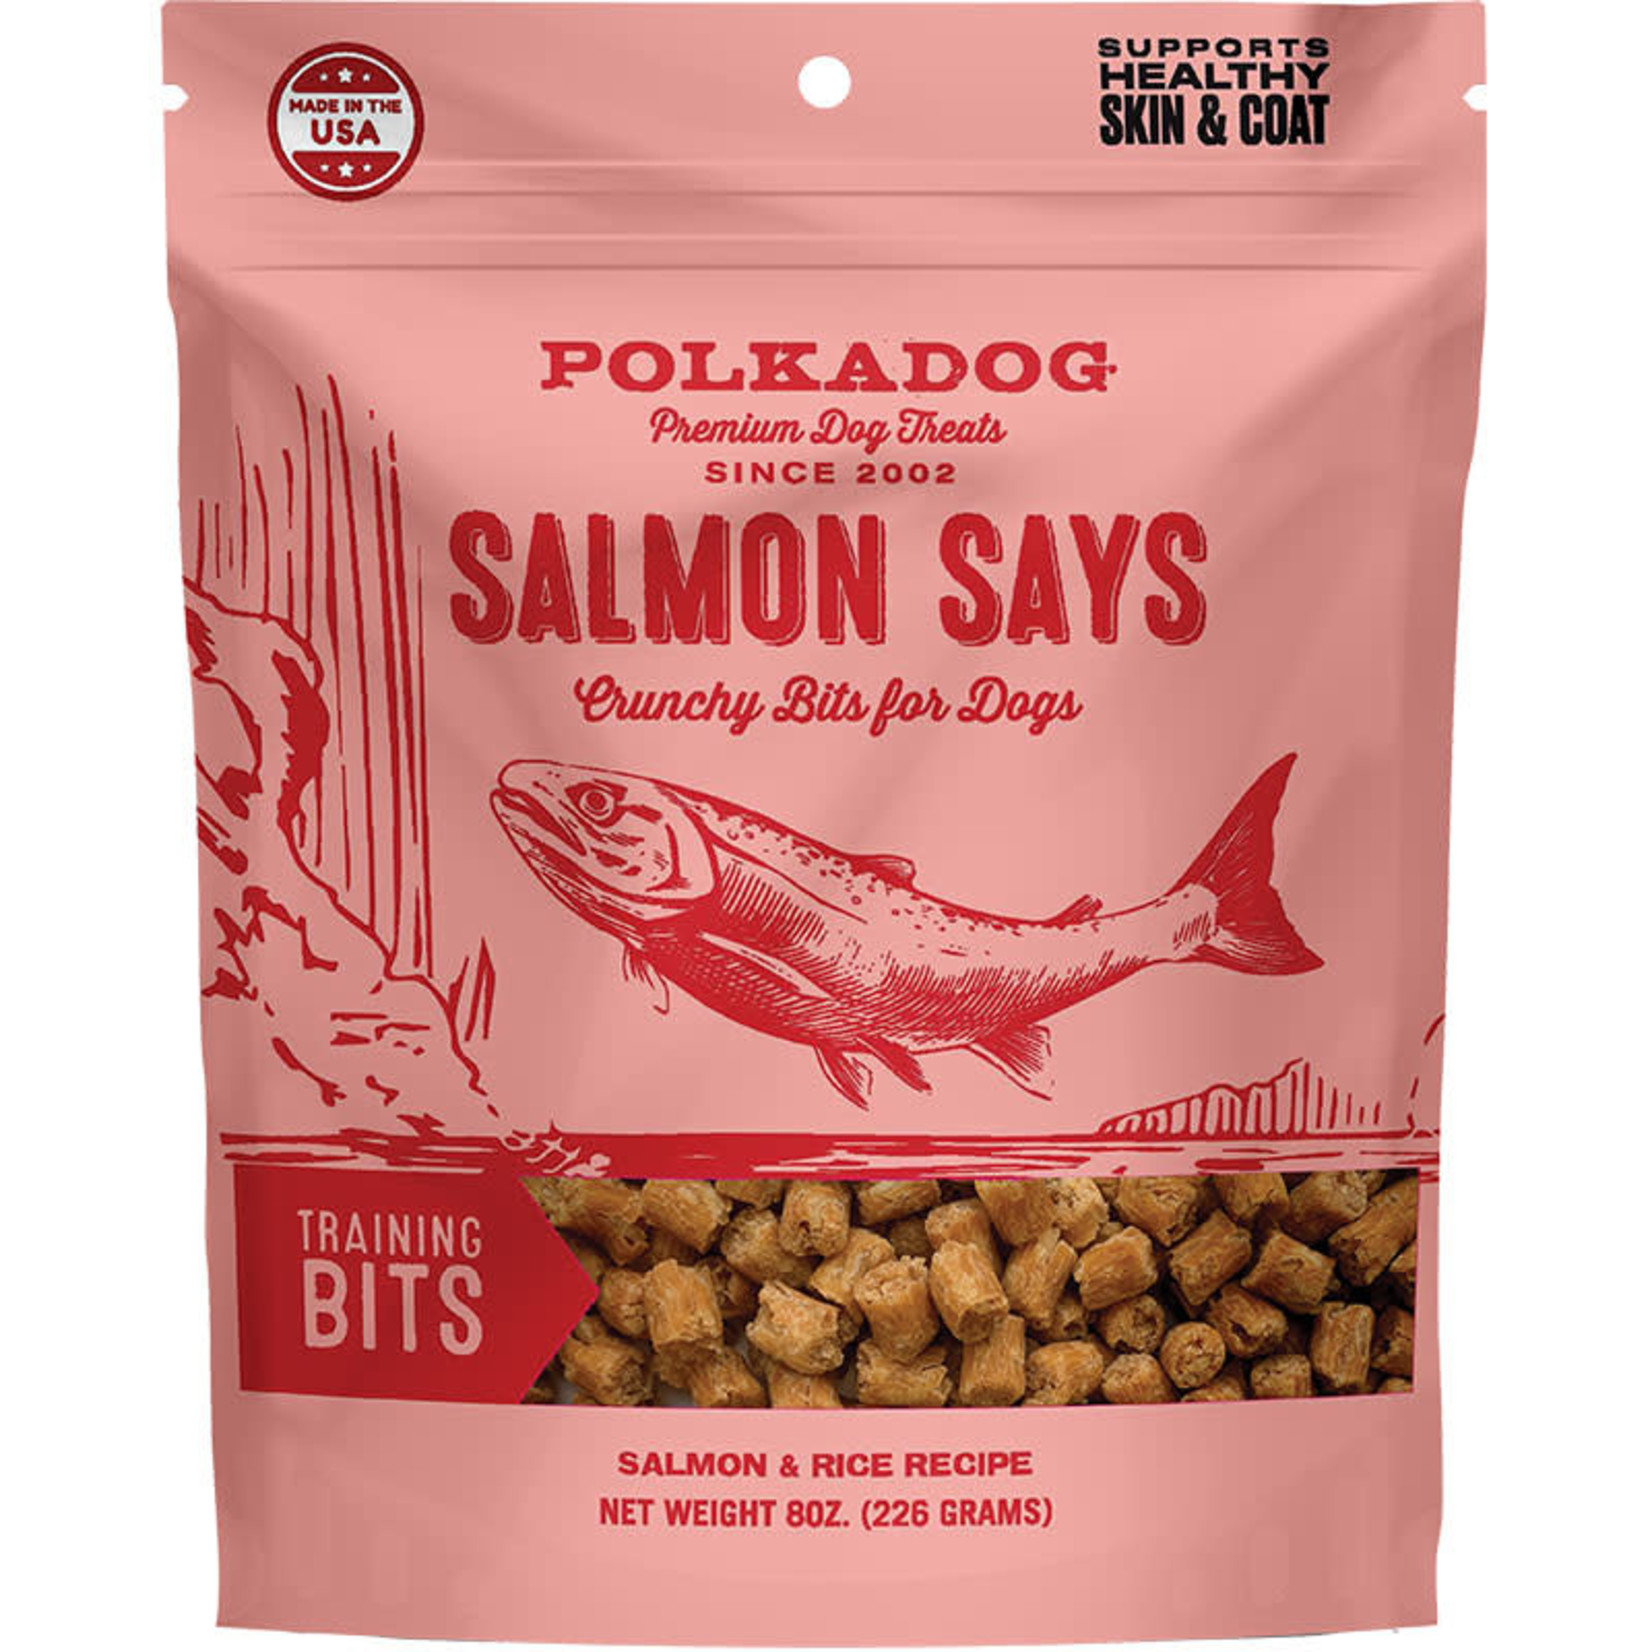 Polka Dog Polkadog Salmon Says Training Bits